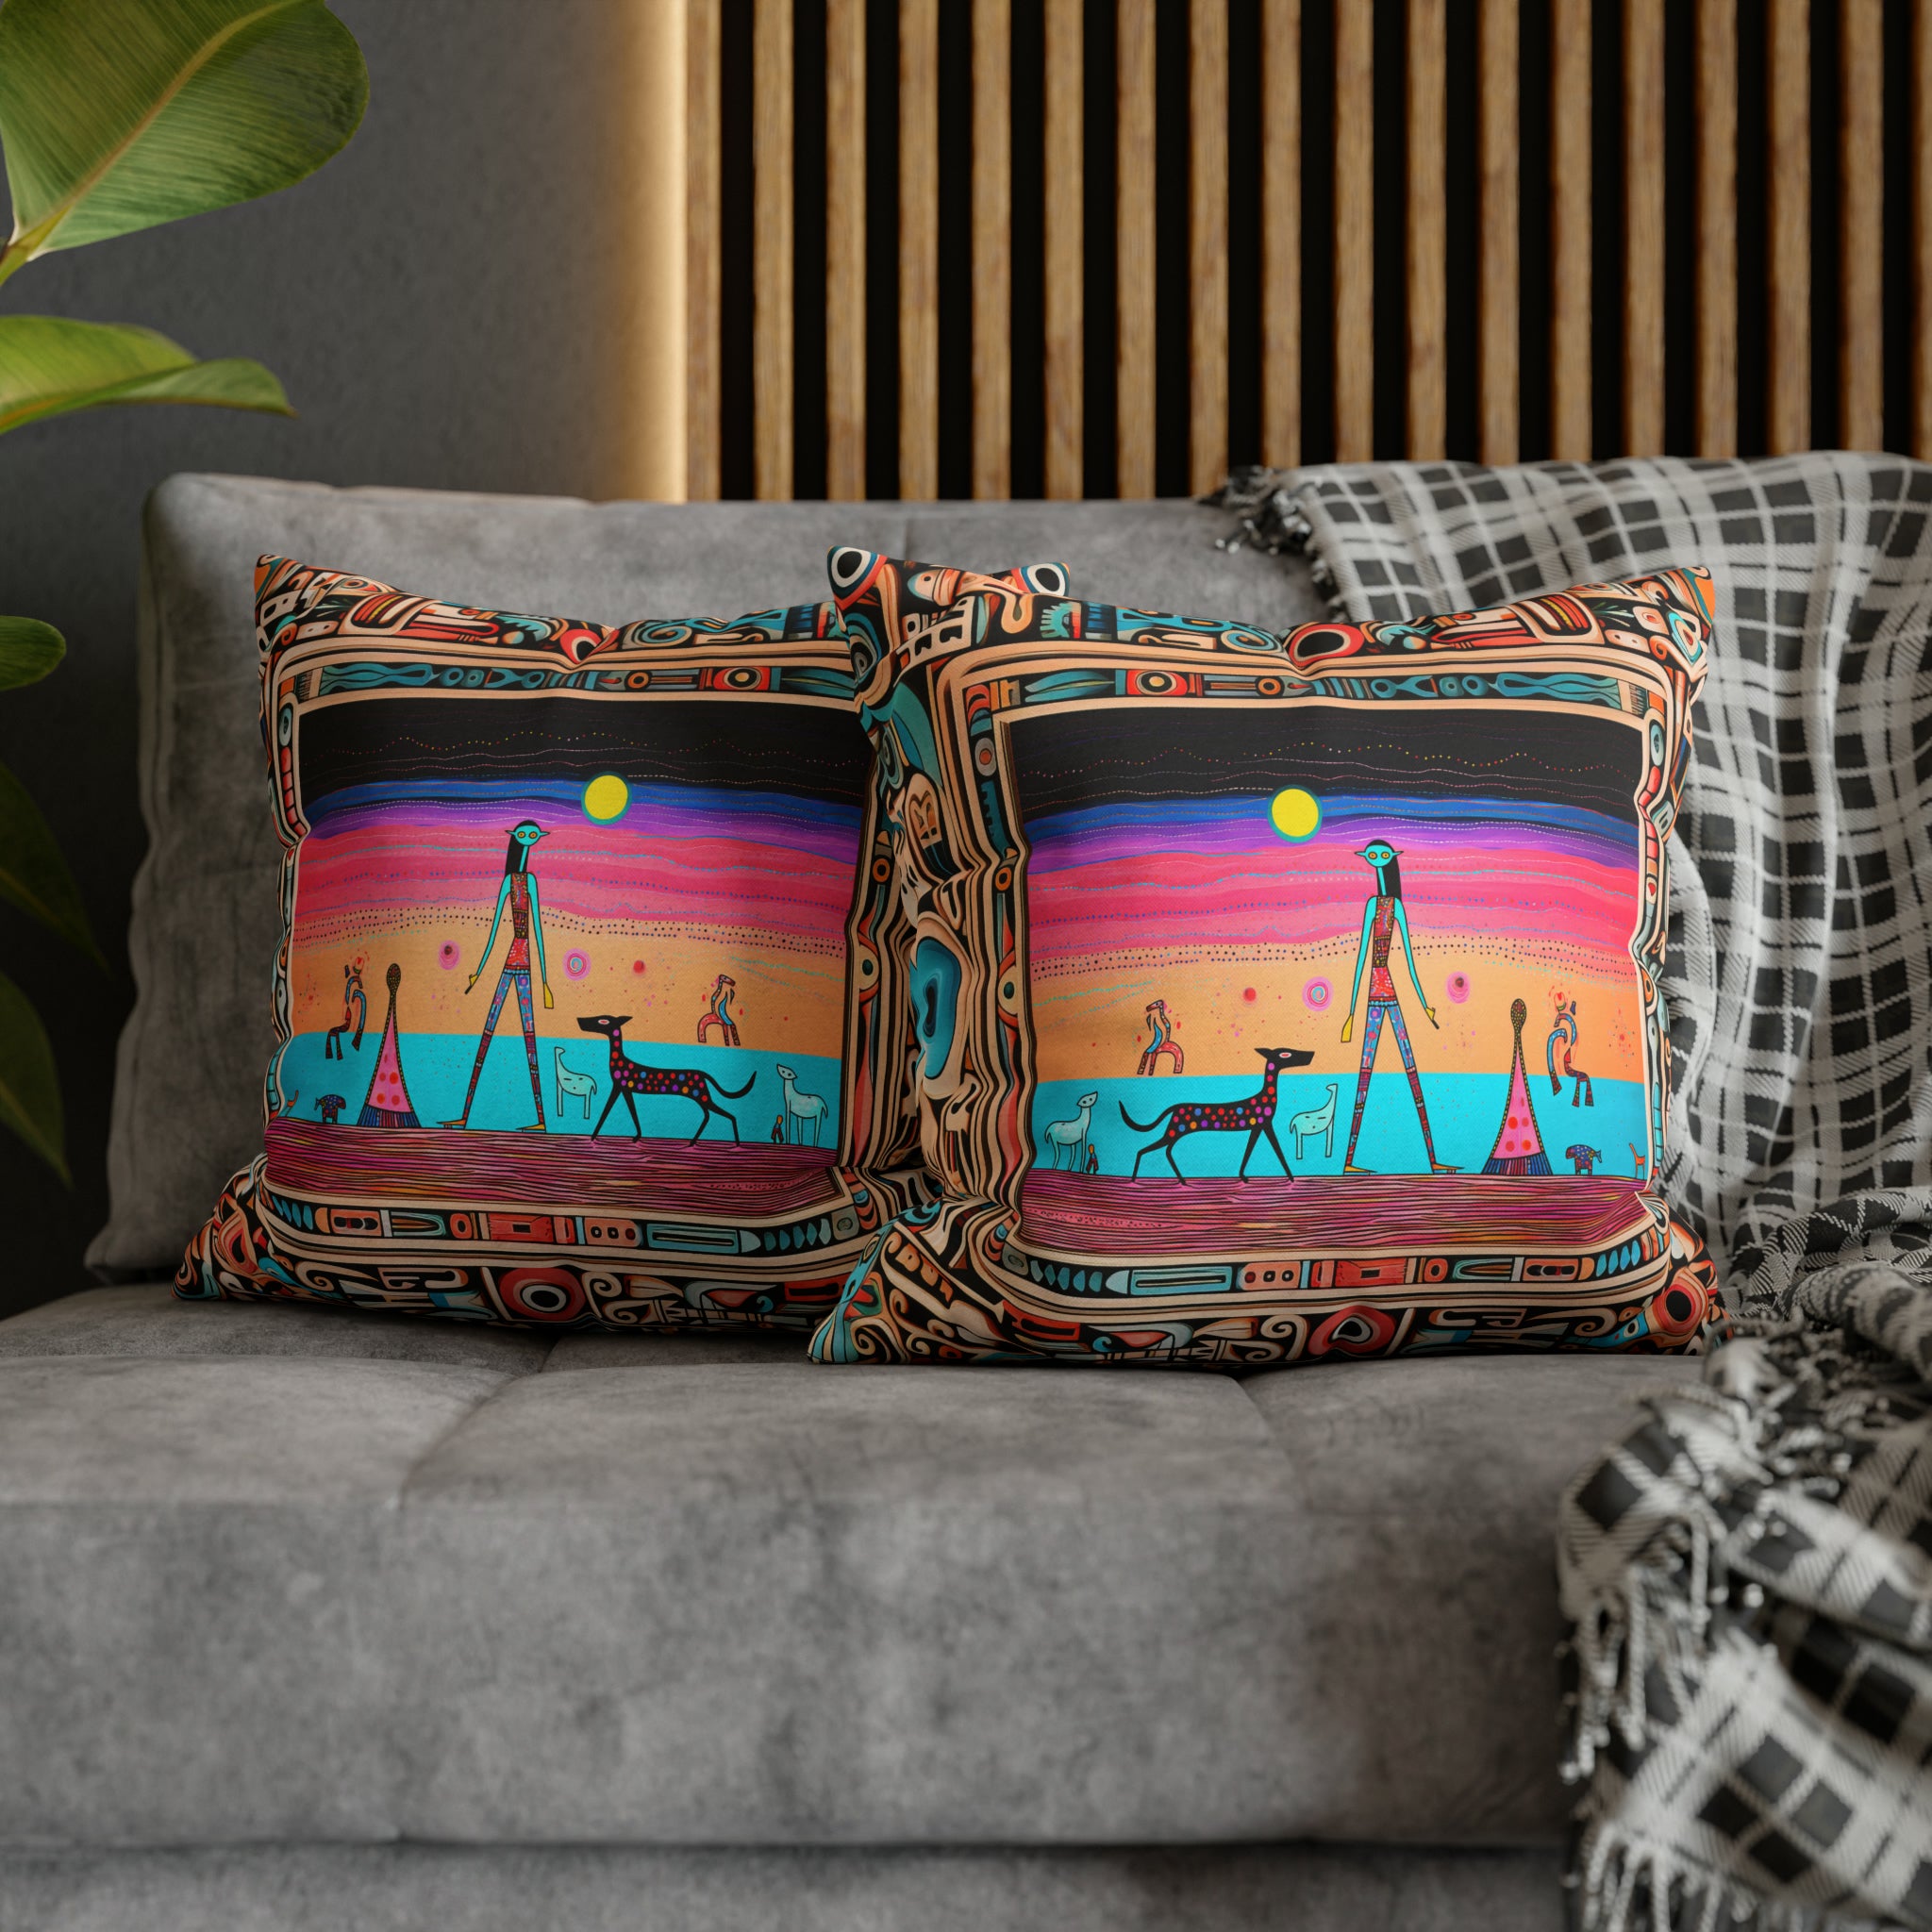 Square Pillow Case 18" x 18", CASE ONLY, no pillow form, original Pop Art Style, Beach Sunset on Mars, Framed